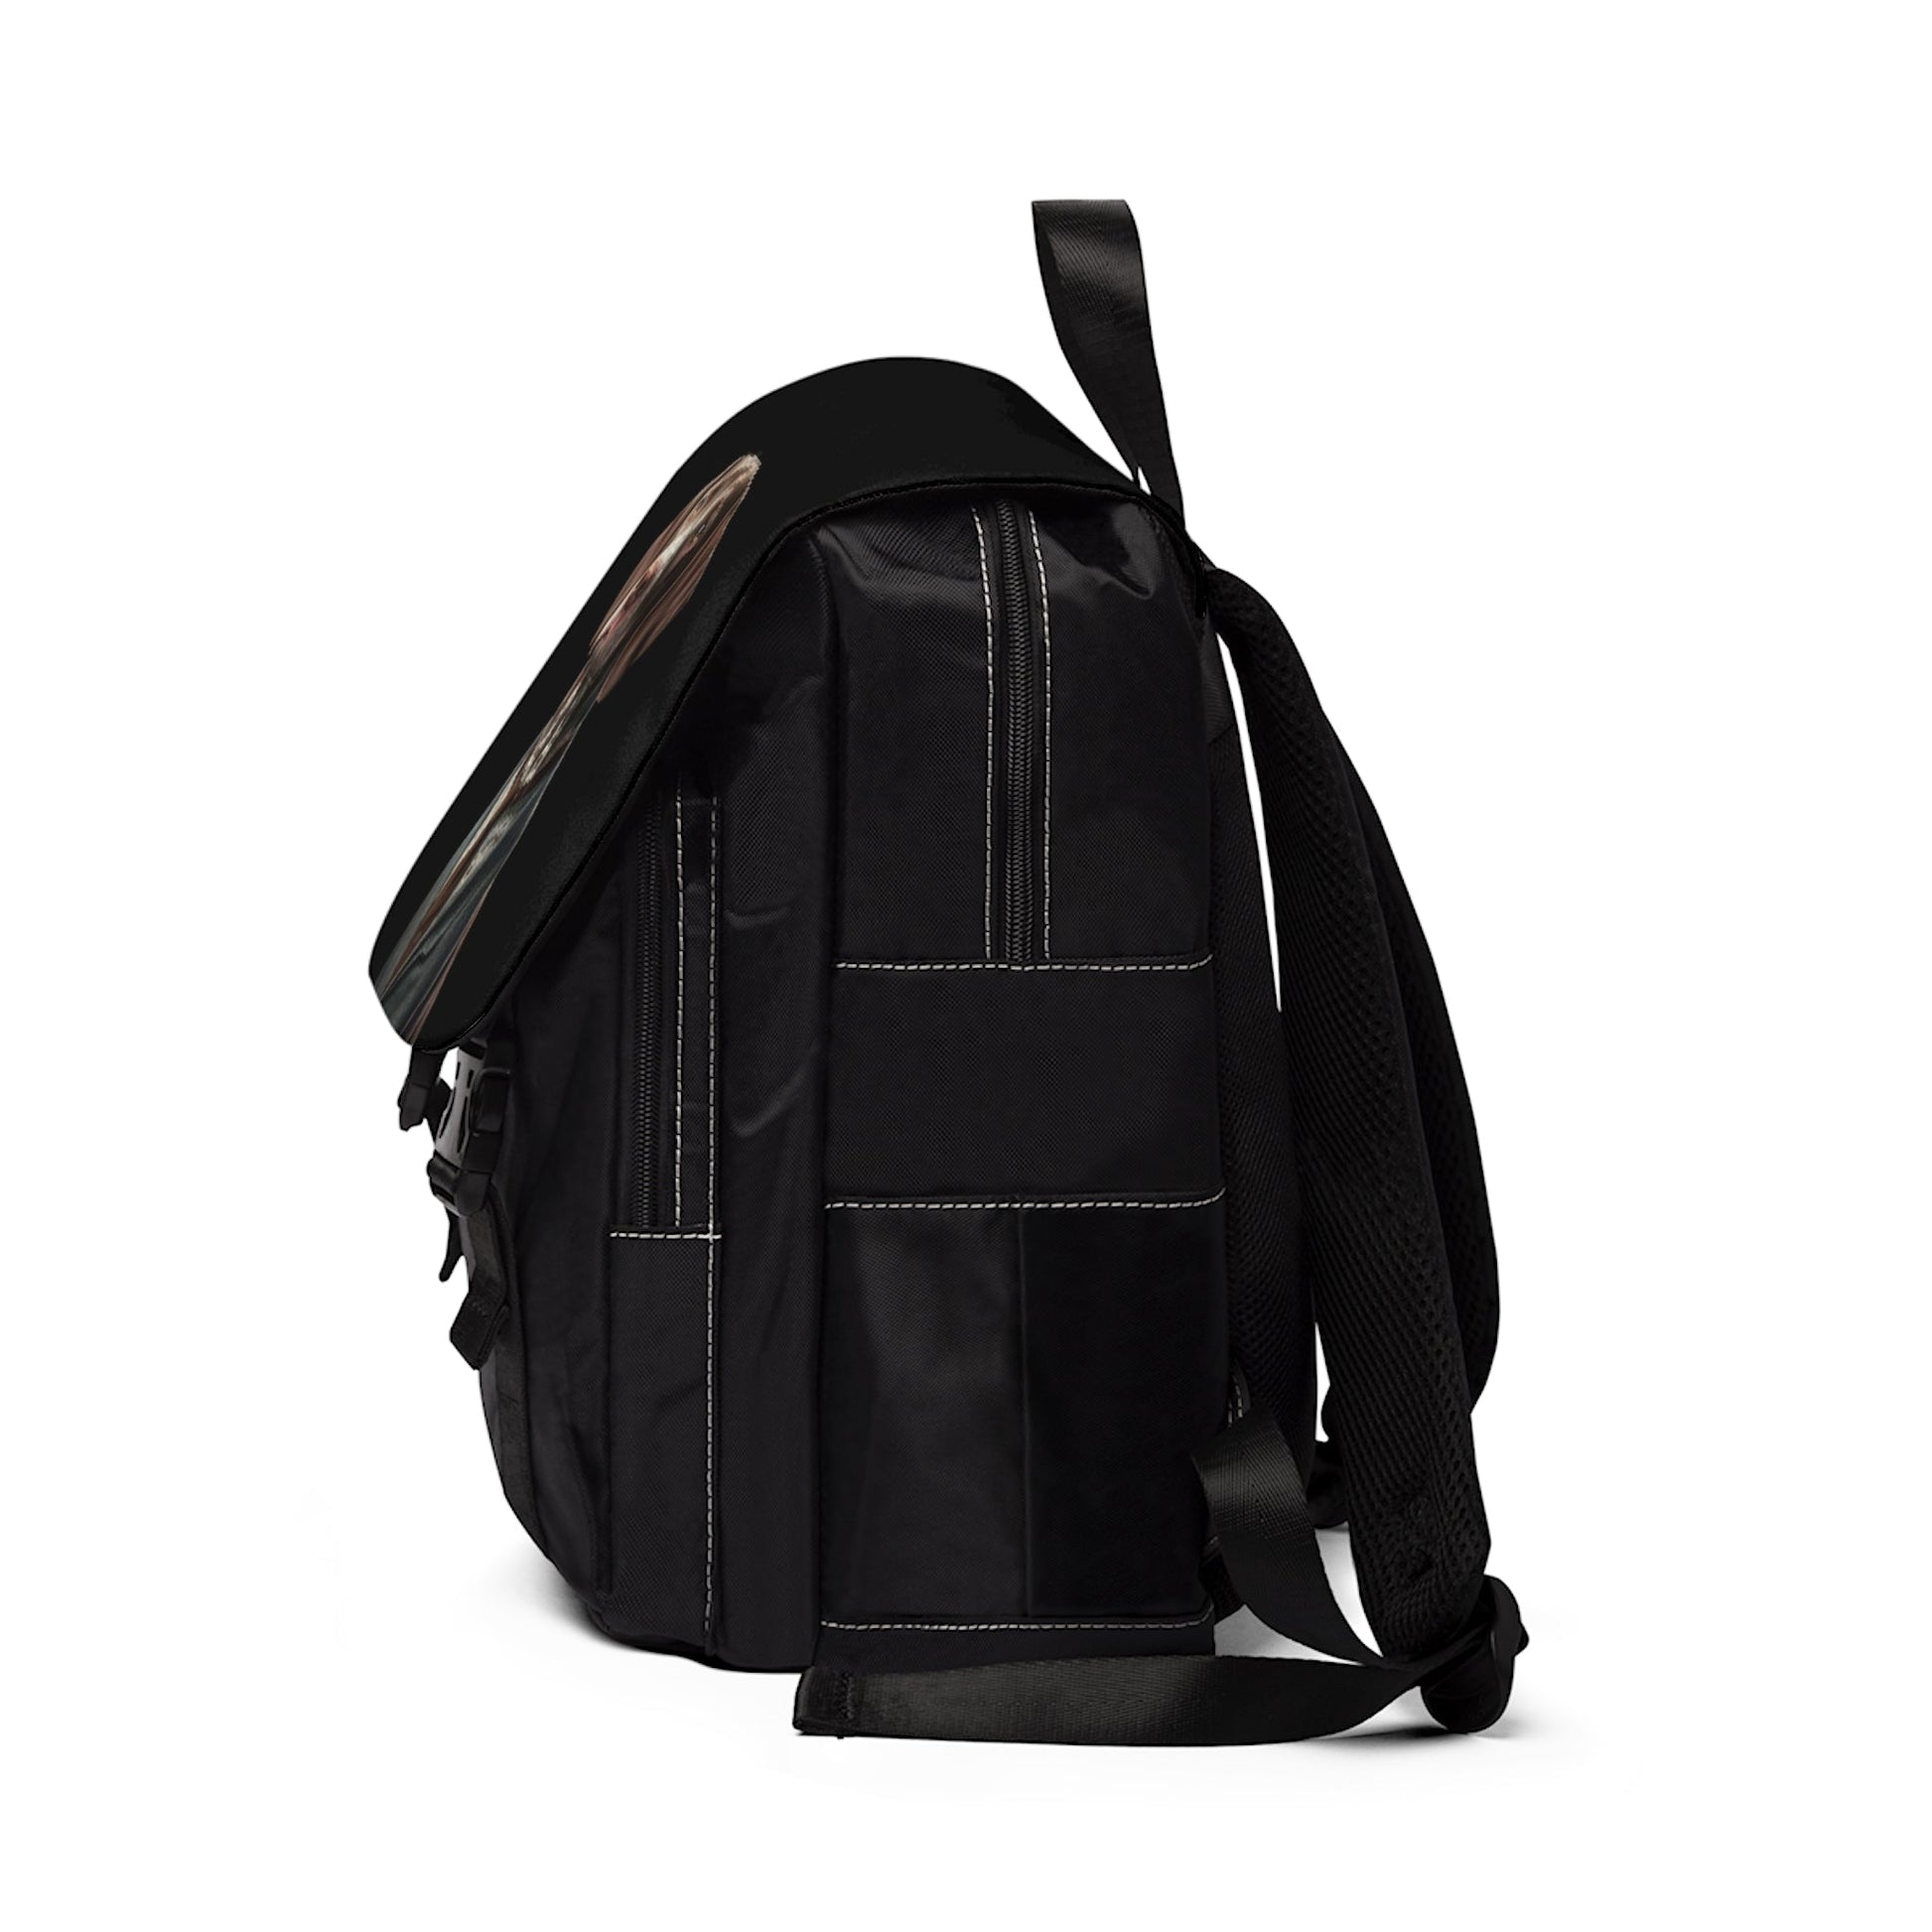 DAWSON : Unisex Casual Shoulder Backpack - Shaggy Chic